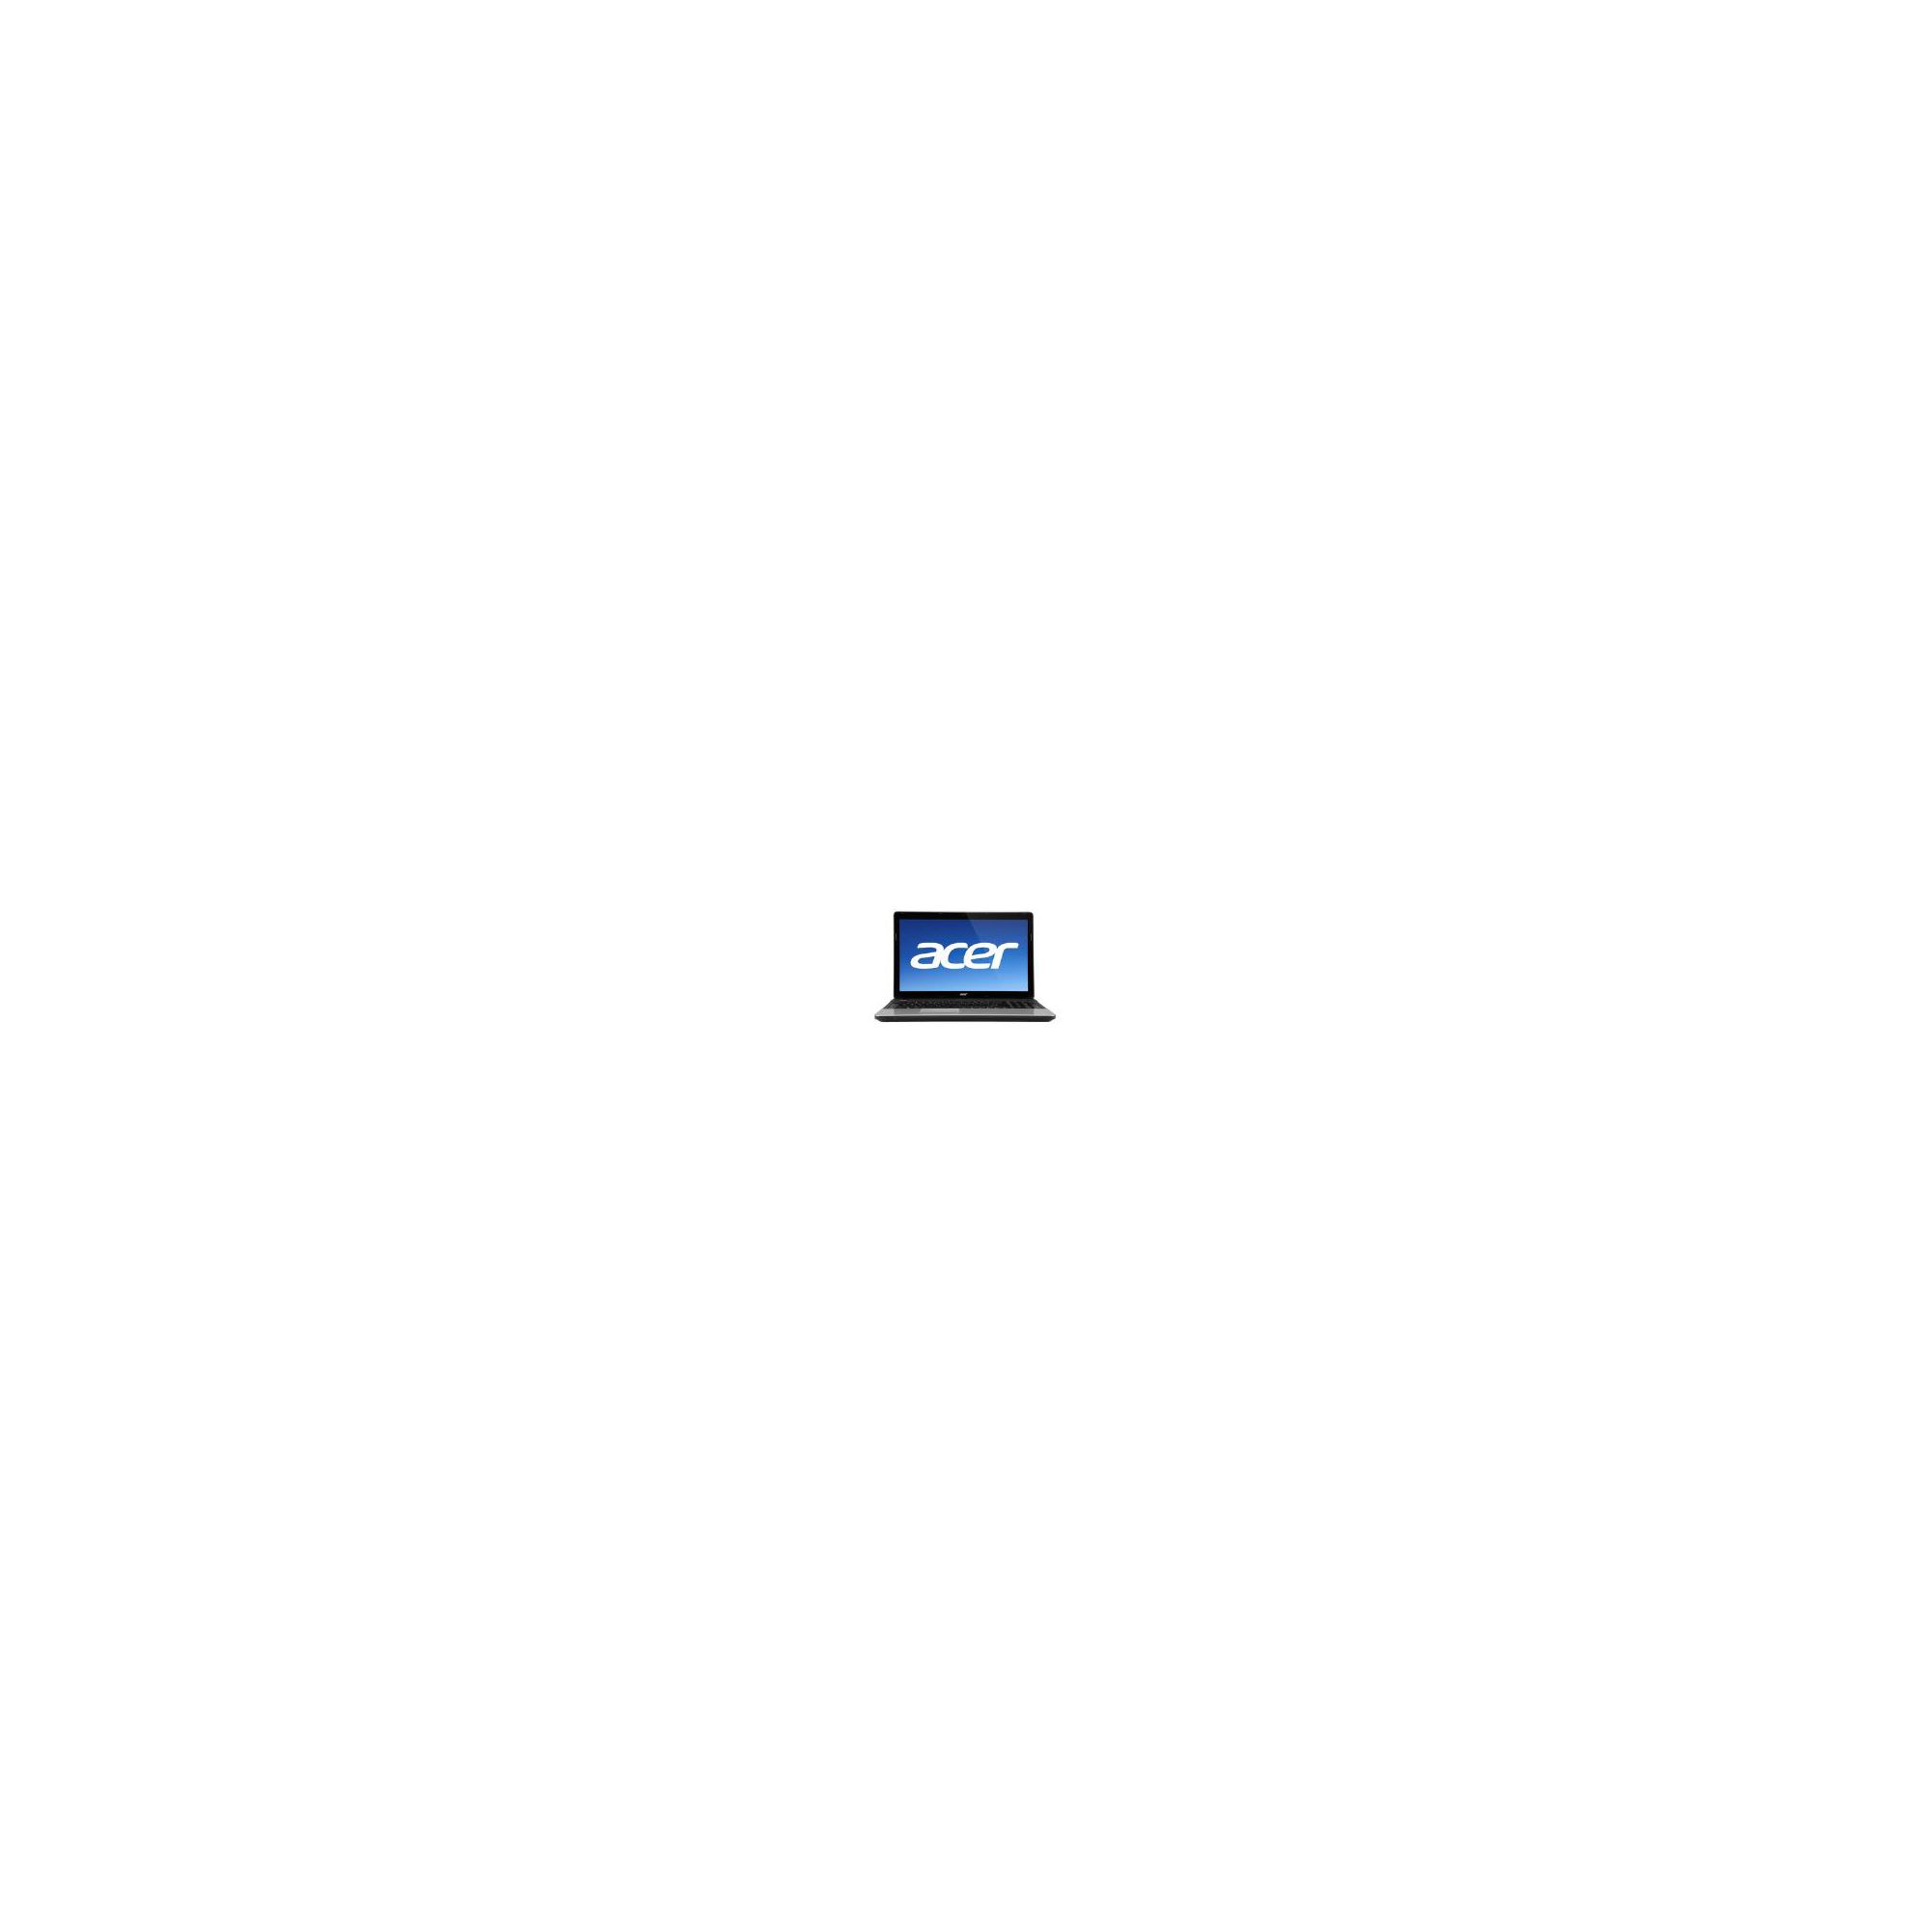 Acer Aspire E1-531-B9604G50Mnks (15.6 inch) Notebook PC Pentium (B960) 2.2GHz 4GB 500GB DVD Writer WLAN Webcam Windows 8 64-bit (Intel GMA HD) at Tescos Direct